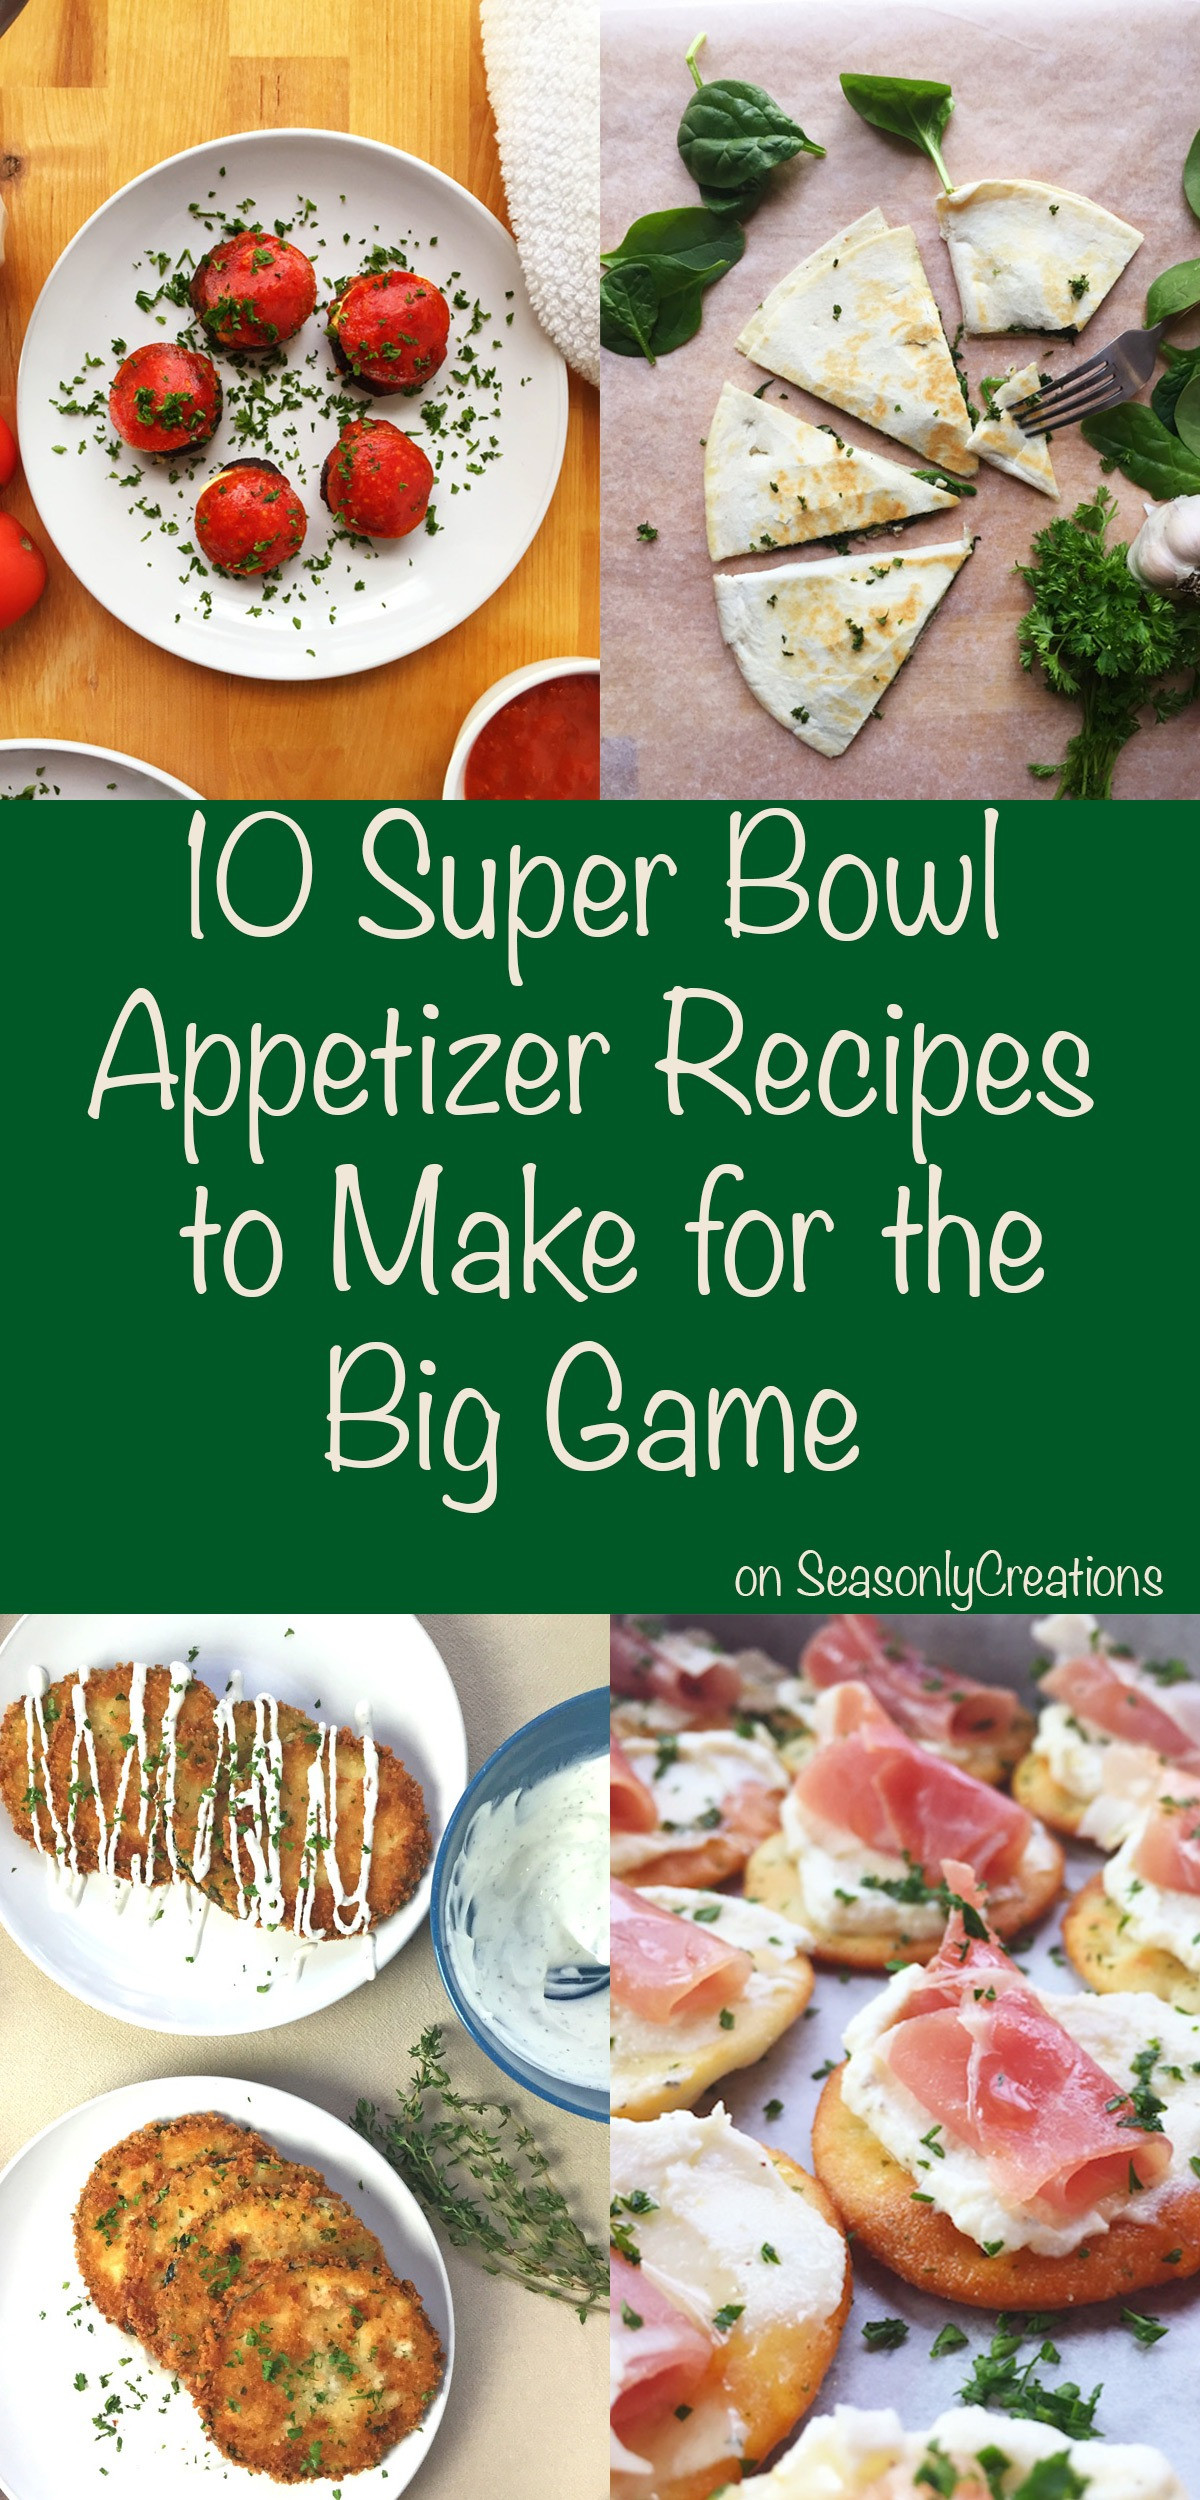 Super Bowl Appetizer Recipes
 10 Super Bowl Appetizer Recipes to Make for the Big Game